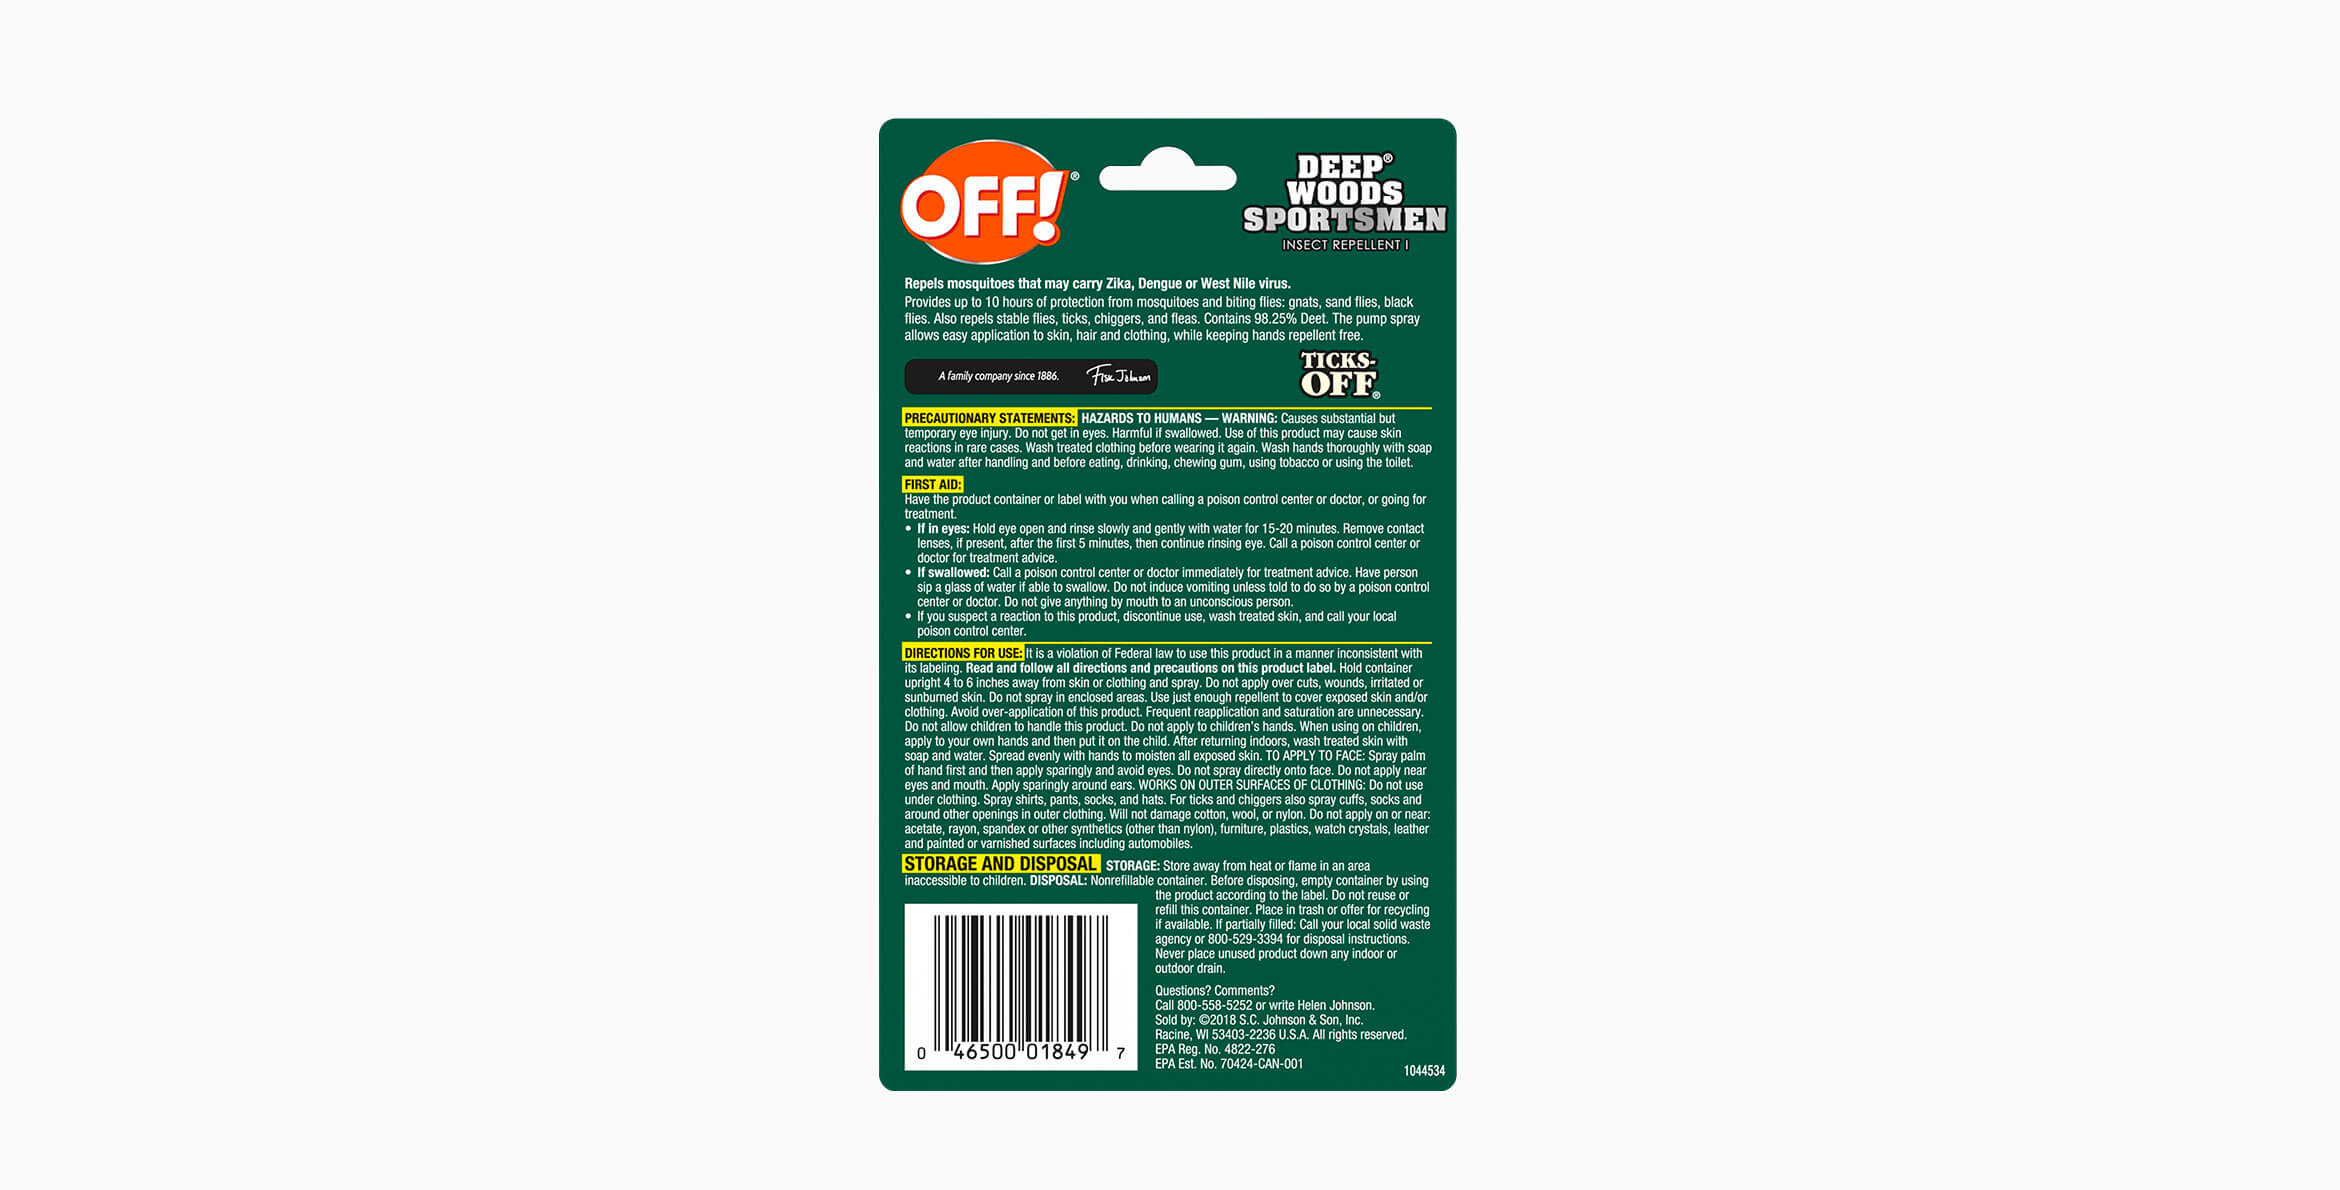 OFF!® Deep Woods® Sportsmen Insect Repellent I